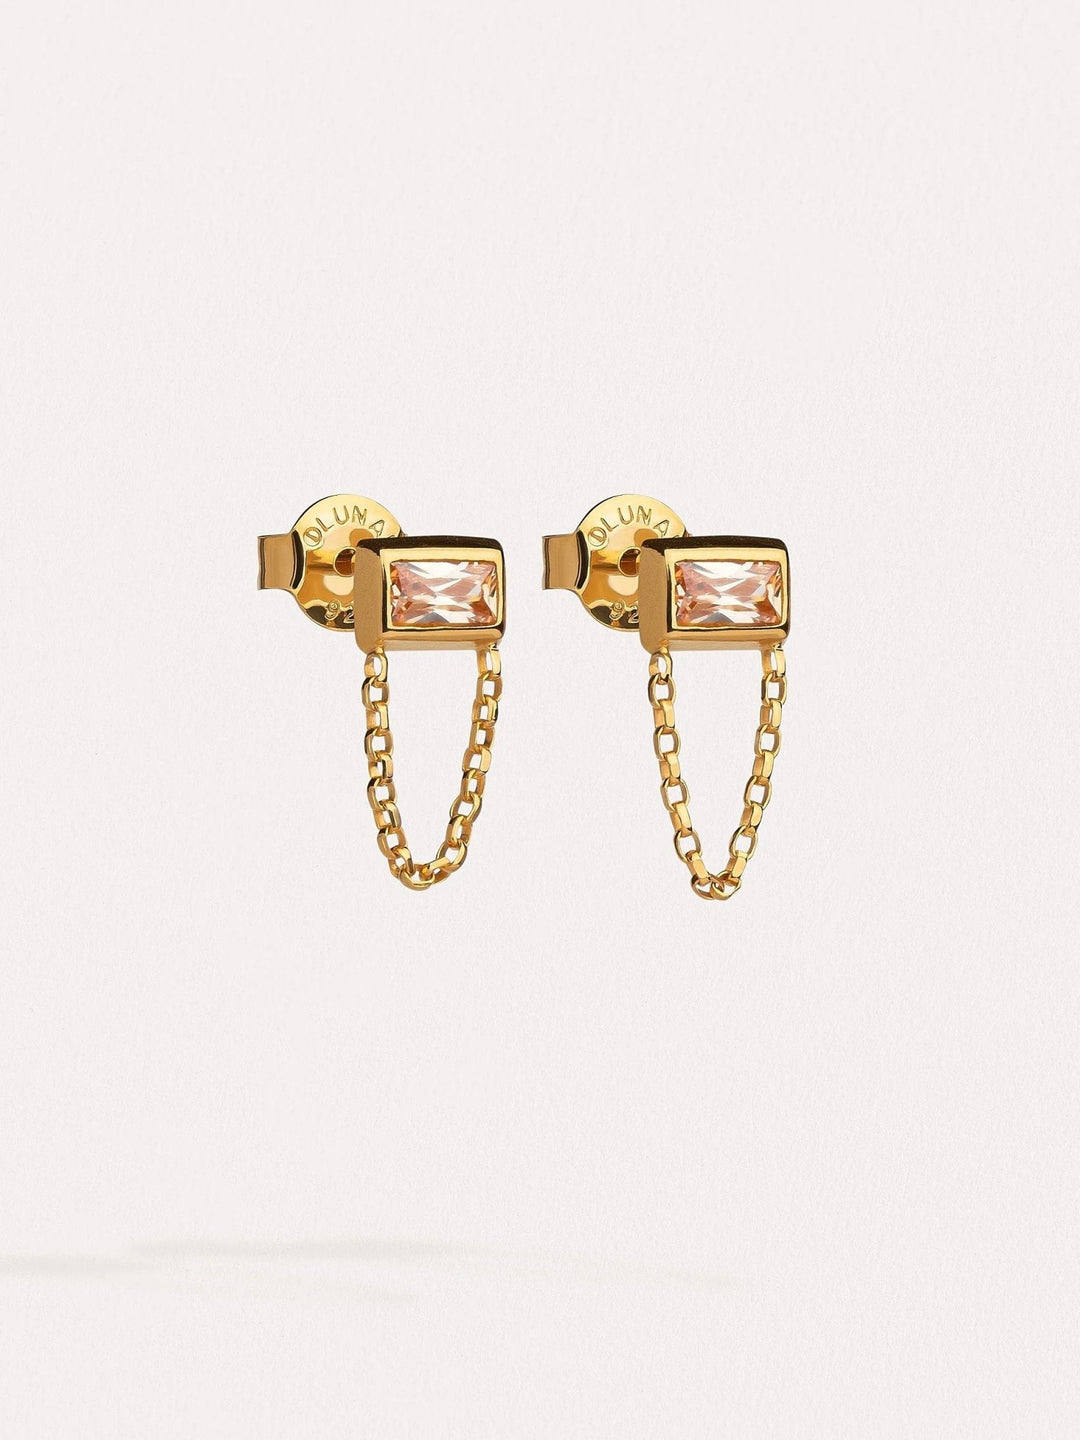 Sirenna Gemstone Stud Earrings - Dark ChampagneAnniversary GiftBoho JewelryLunai Jewelry